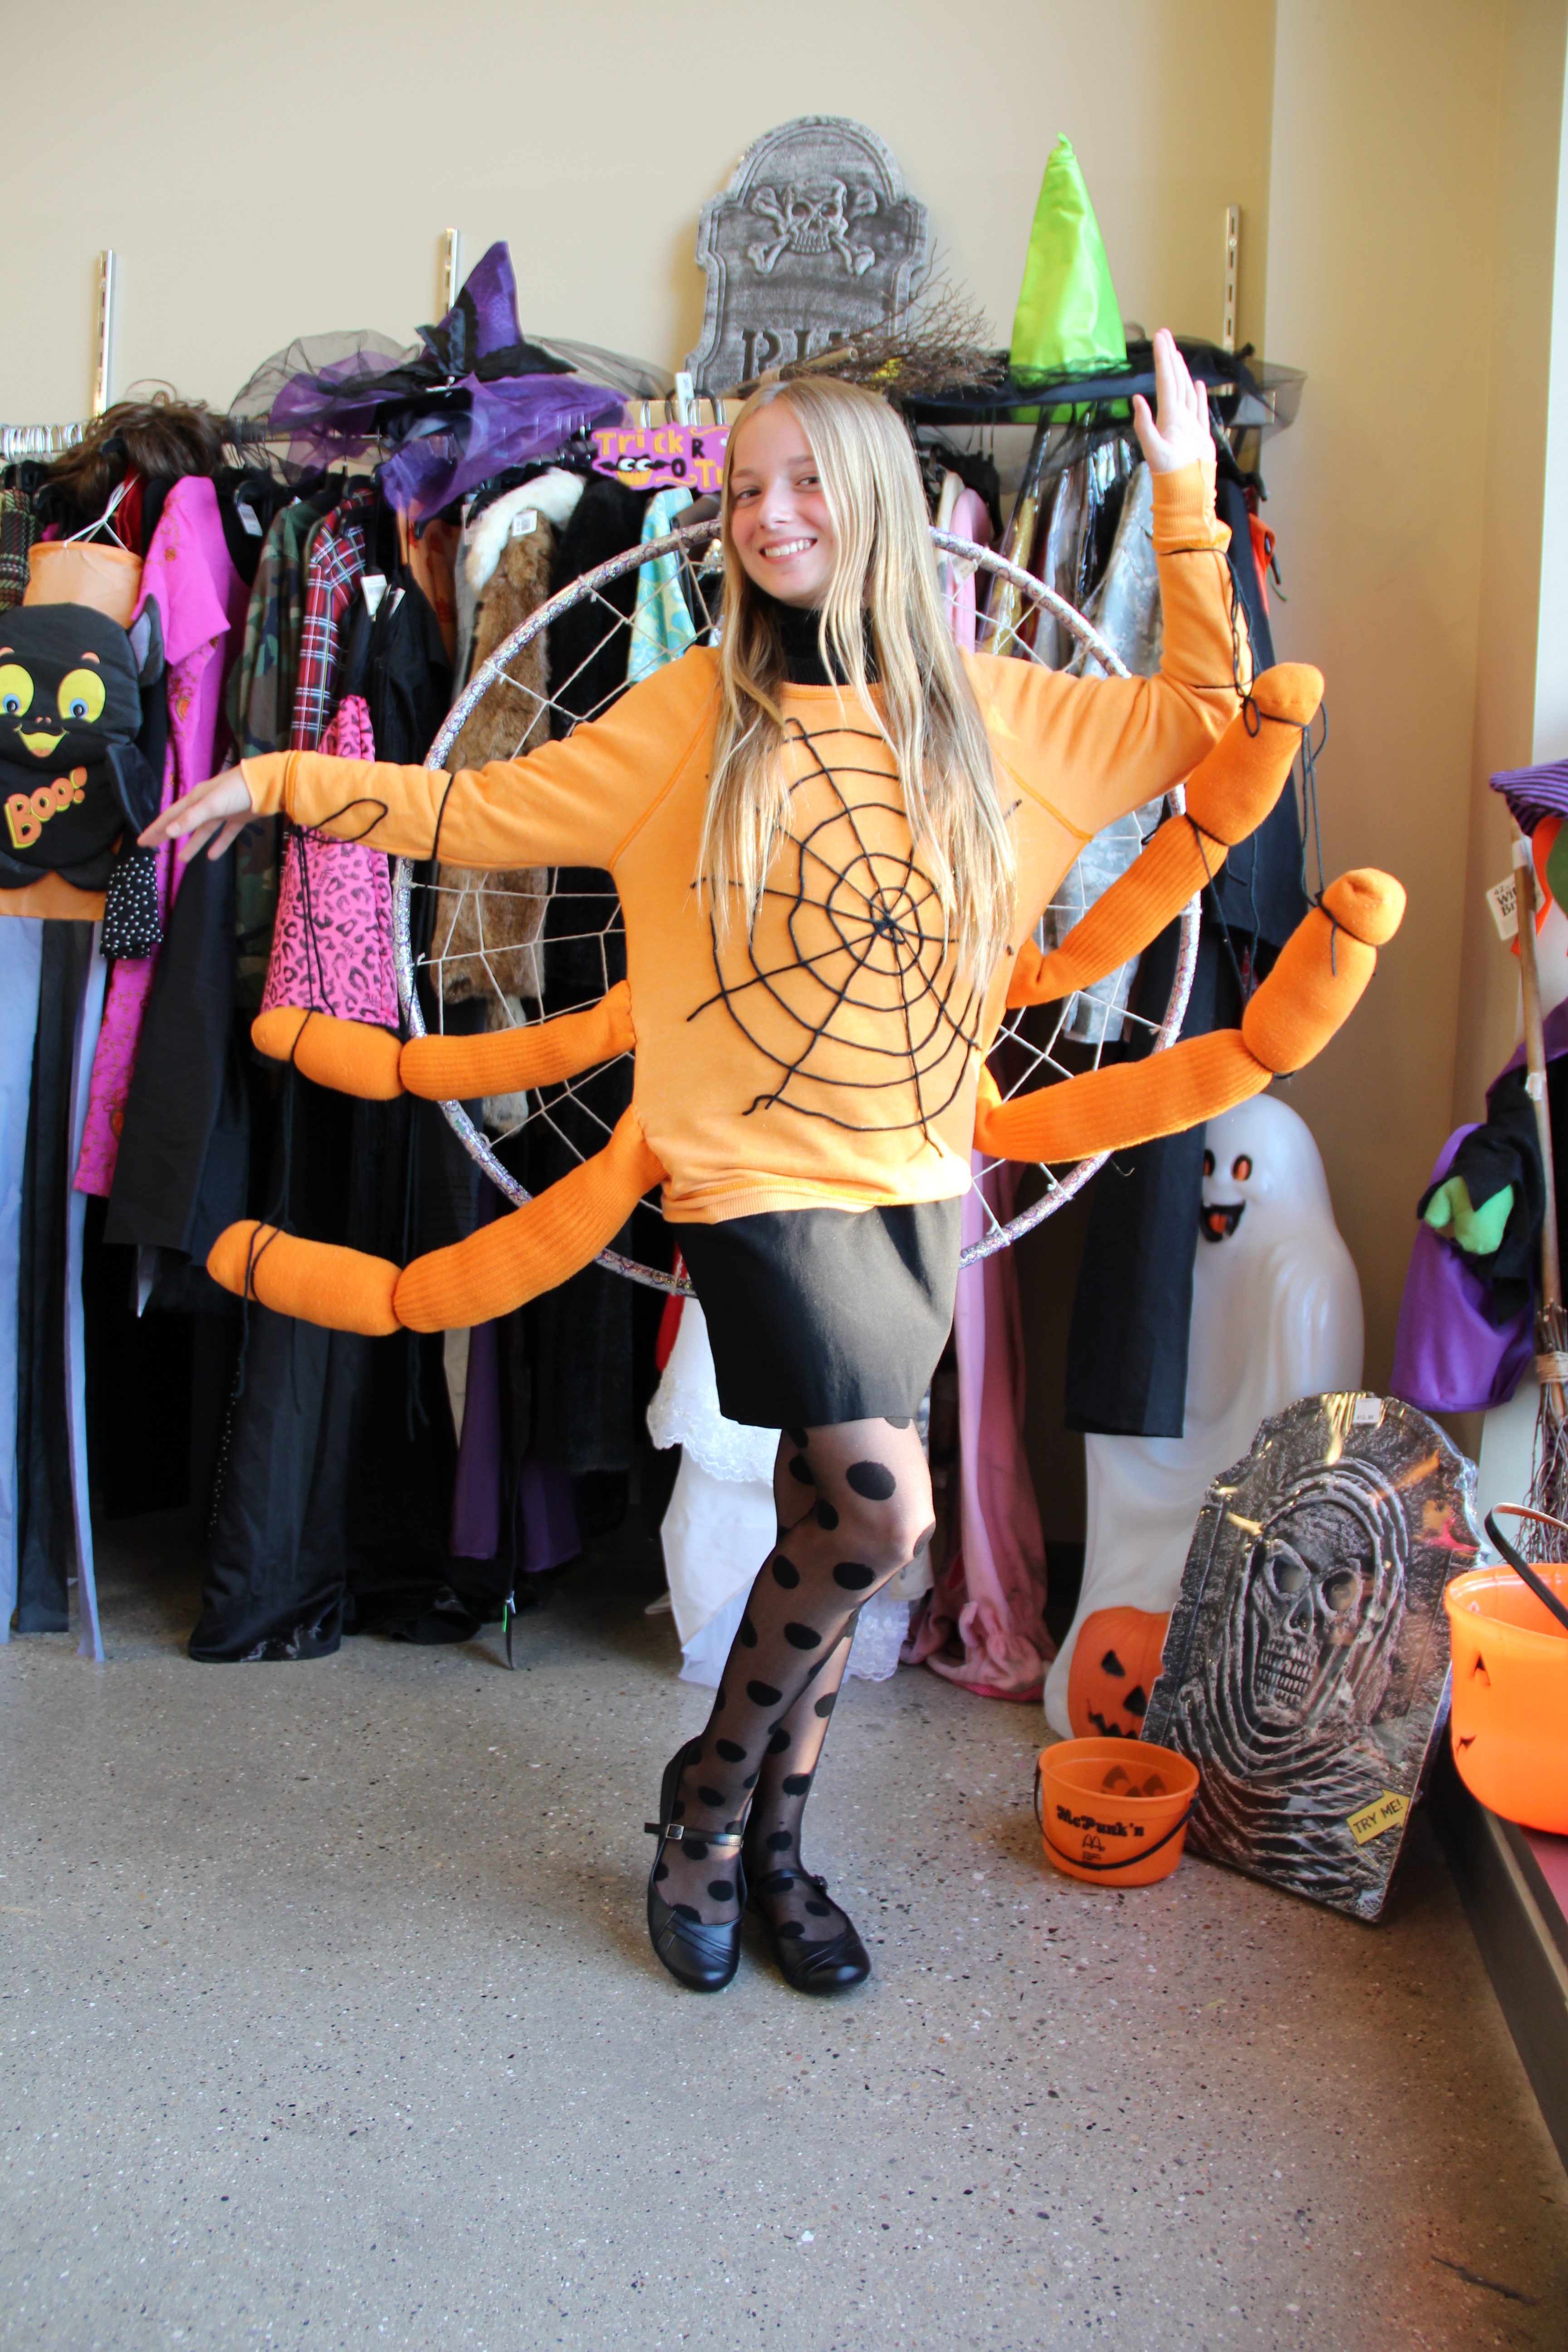 Spiderweb Costume - full view.